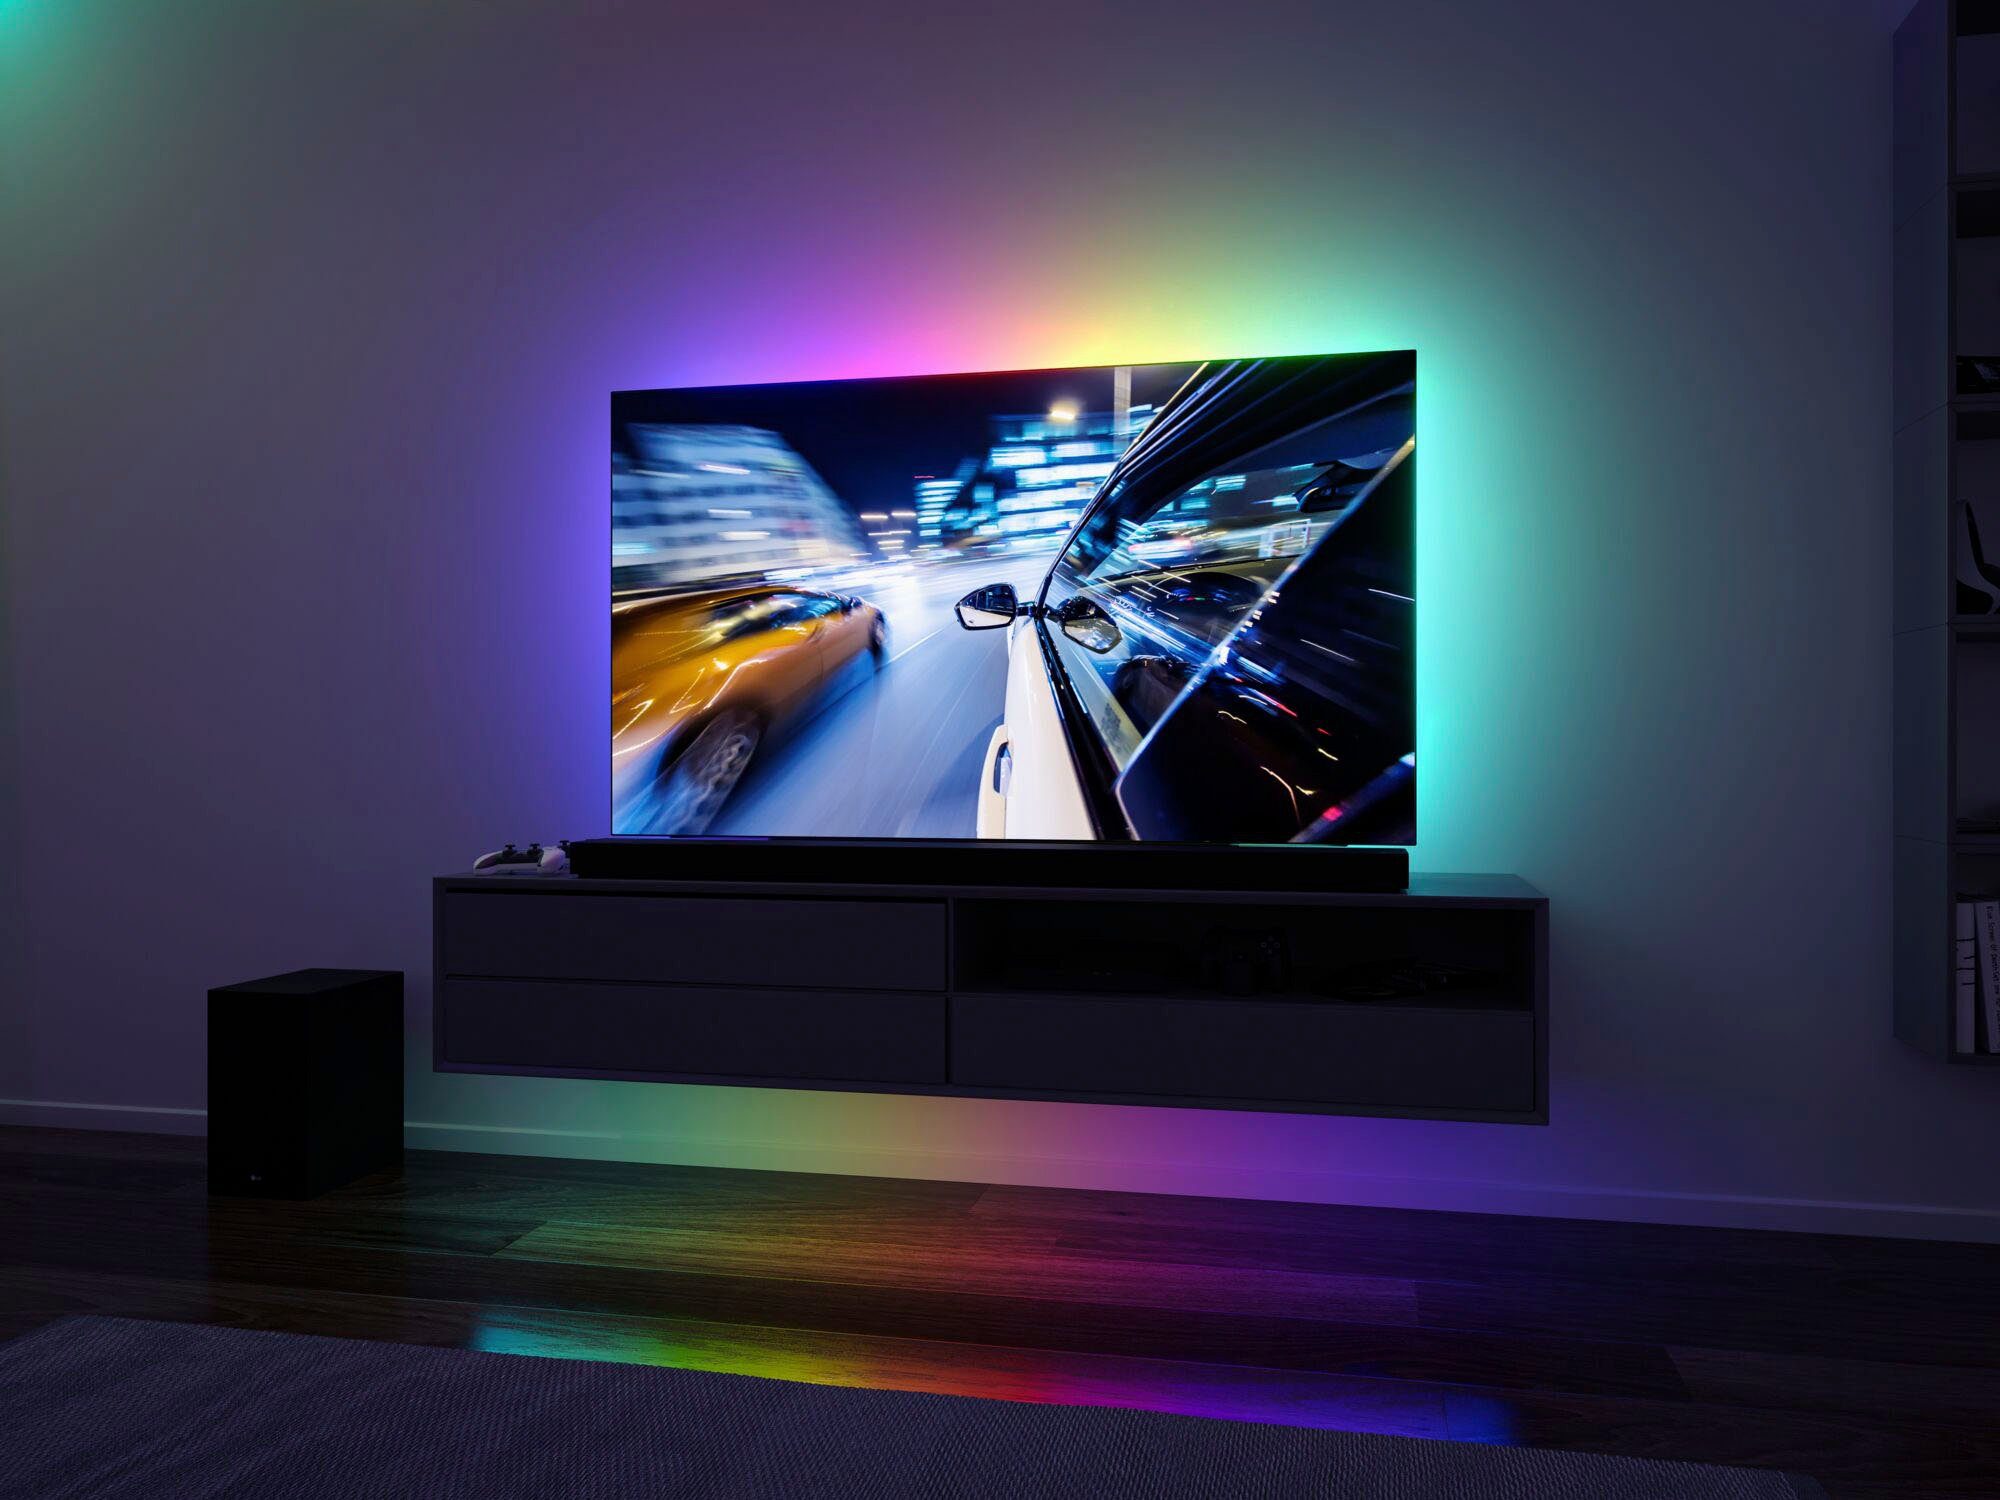 LED-Streifen 2m LED 3,5W, Strip Paulmann USB TV-Beleuchtung 1-flammig 55 Zoll Dynamic RGB Rainbow